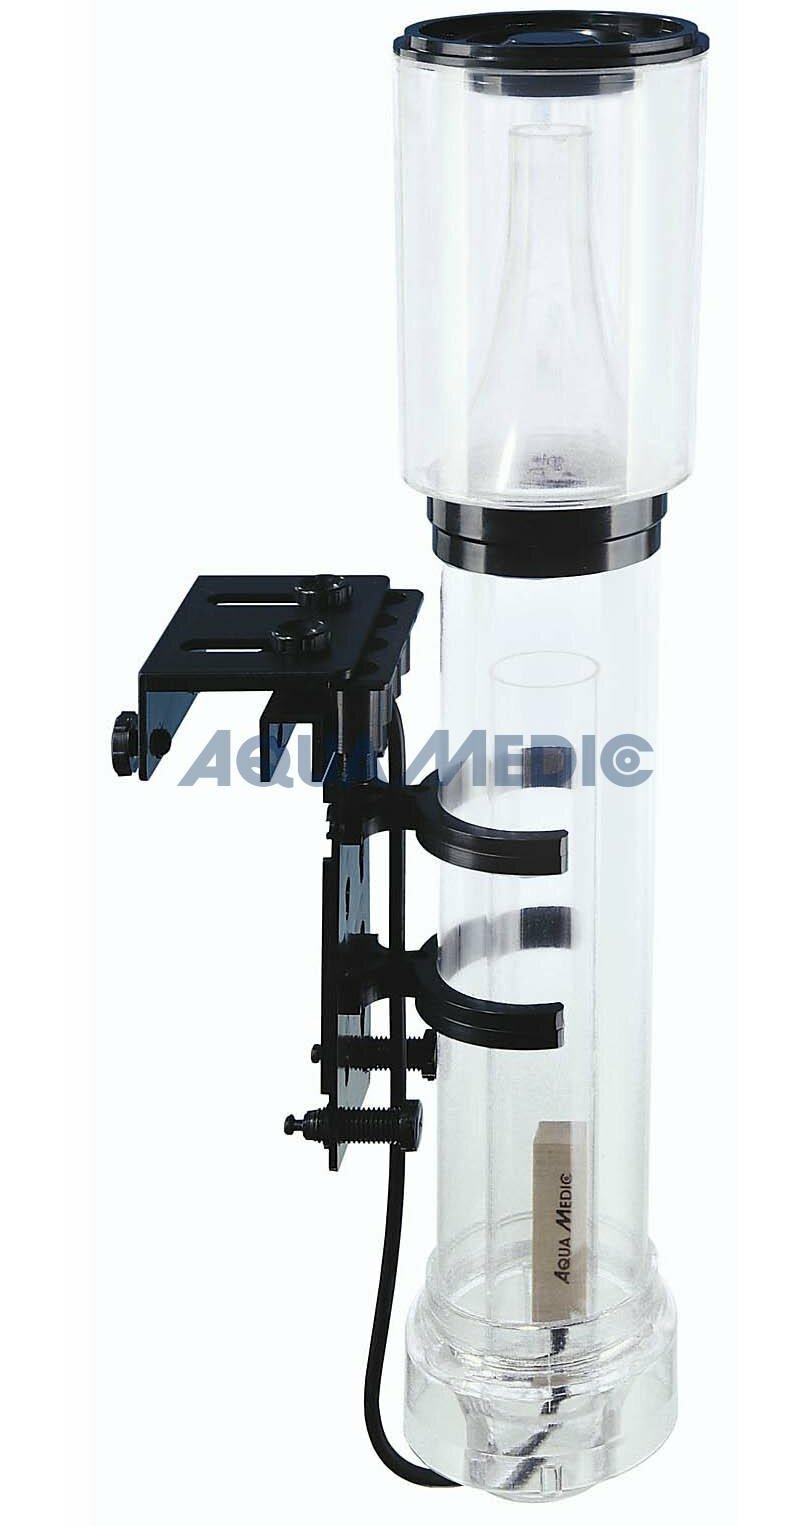 Aquamedic Flotor Protein Skimmer Midi Small Medium Large 